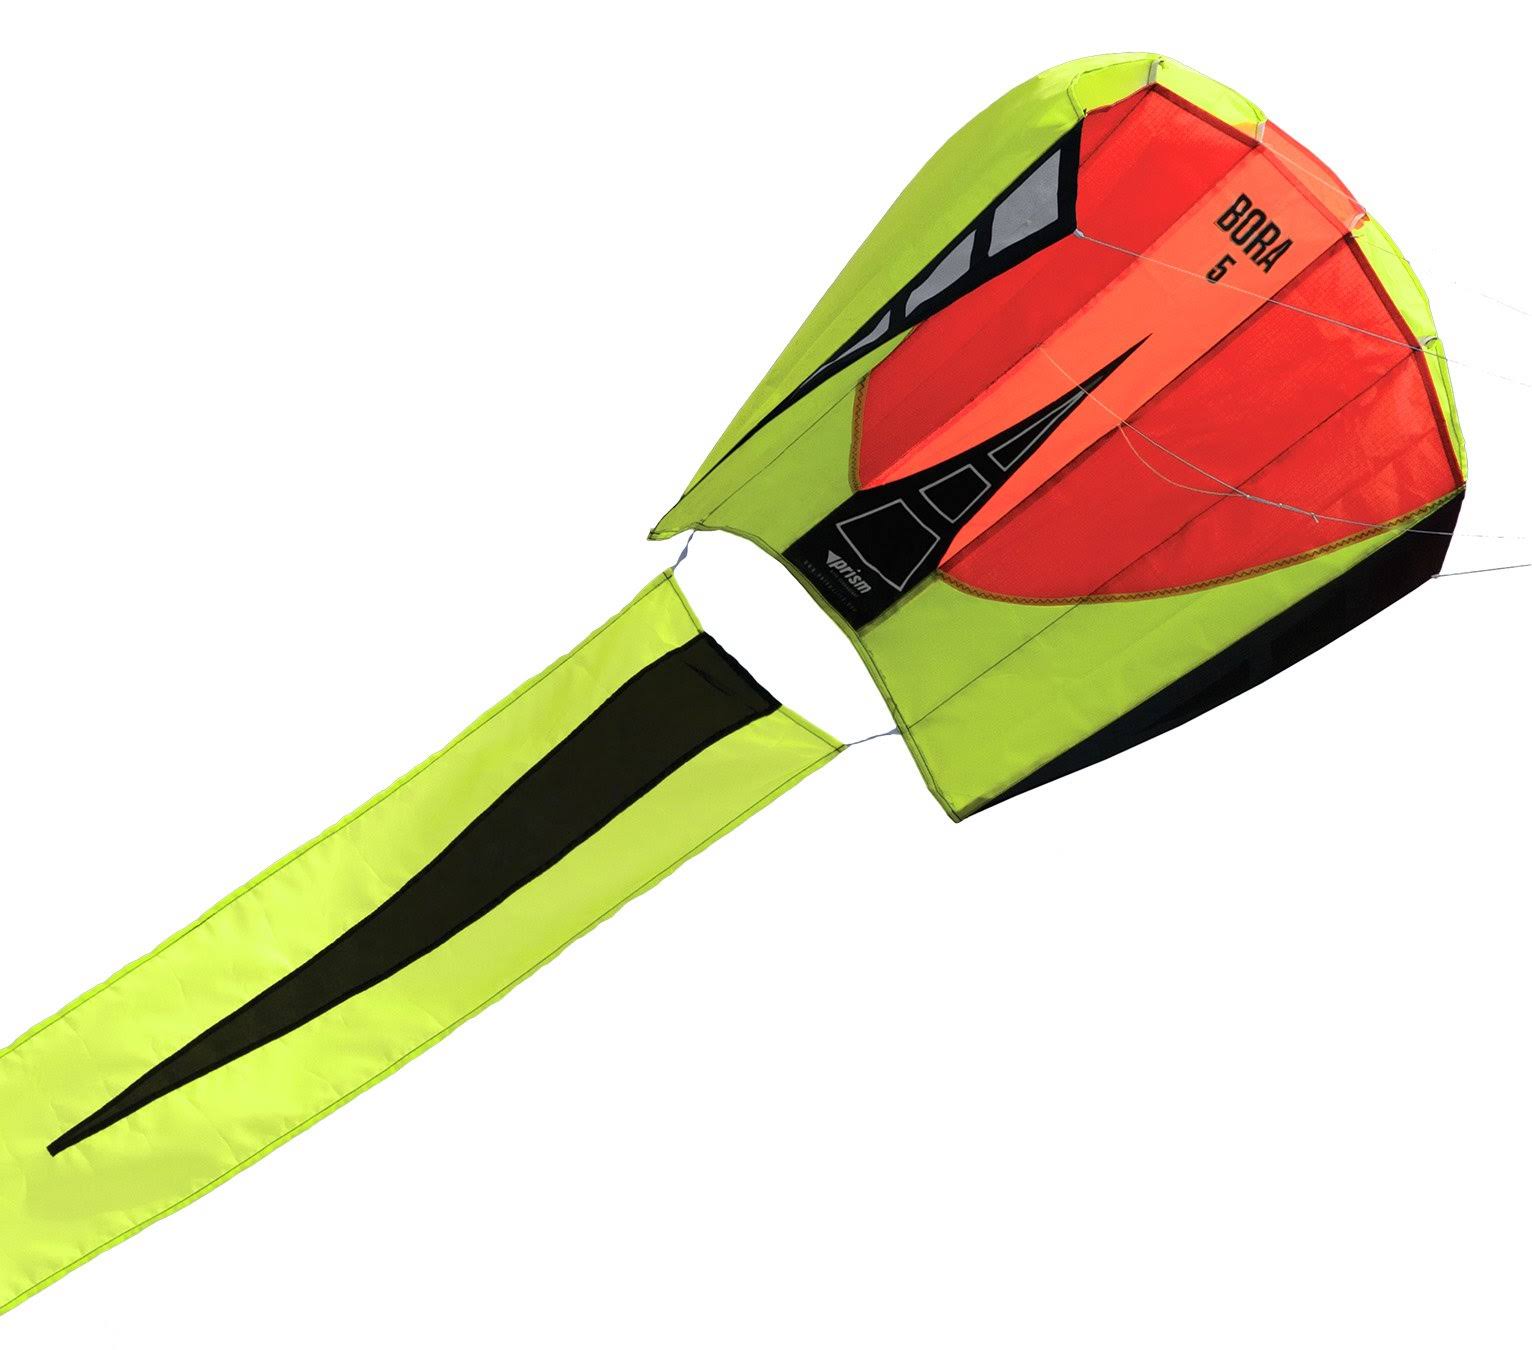 Prism Designs Bora 5 Single Line Kite - Blaze